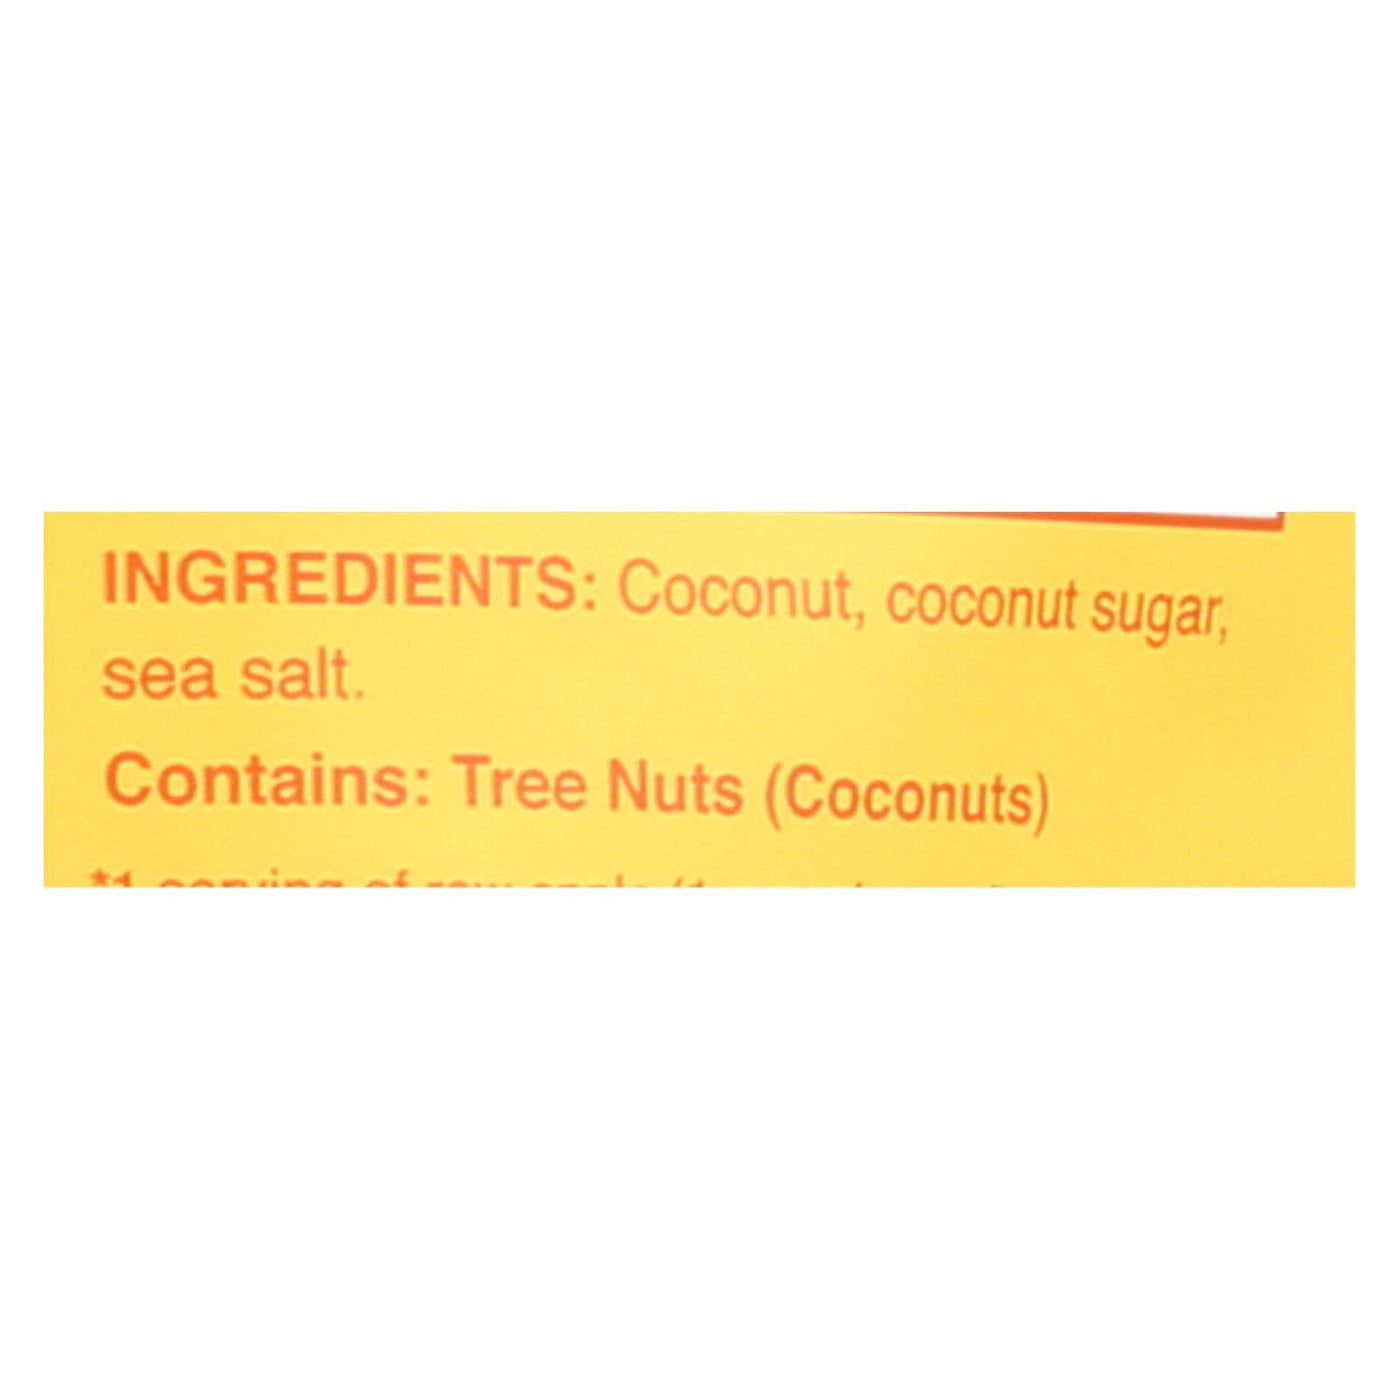 Dang - Toasted Coconut Chips - Caramel Sea Salt - Case Of 12 - 3.17 Oz. | OnlyNaturals.us